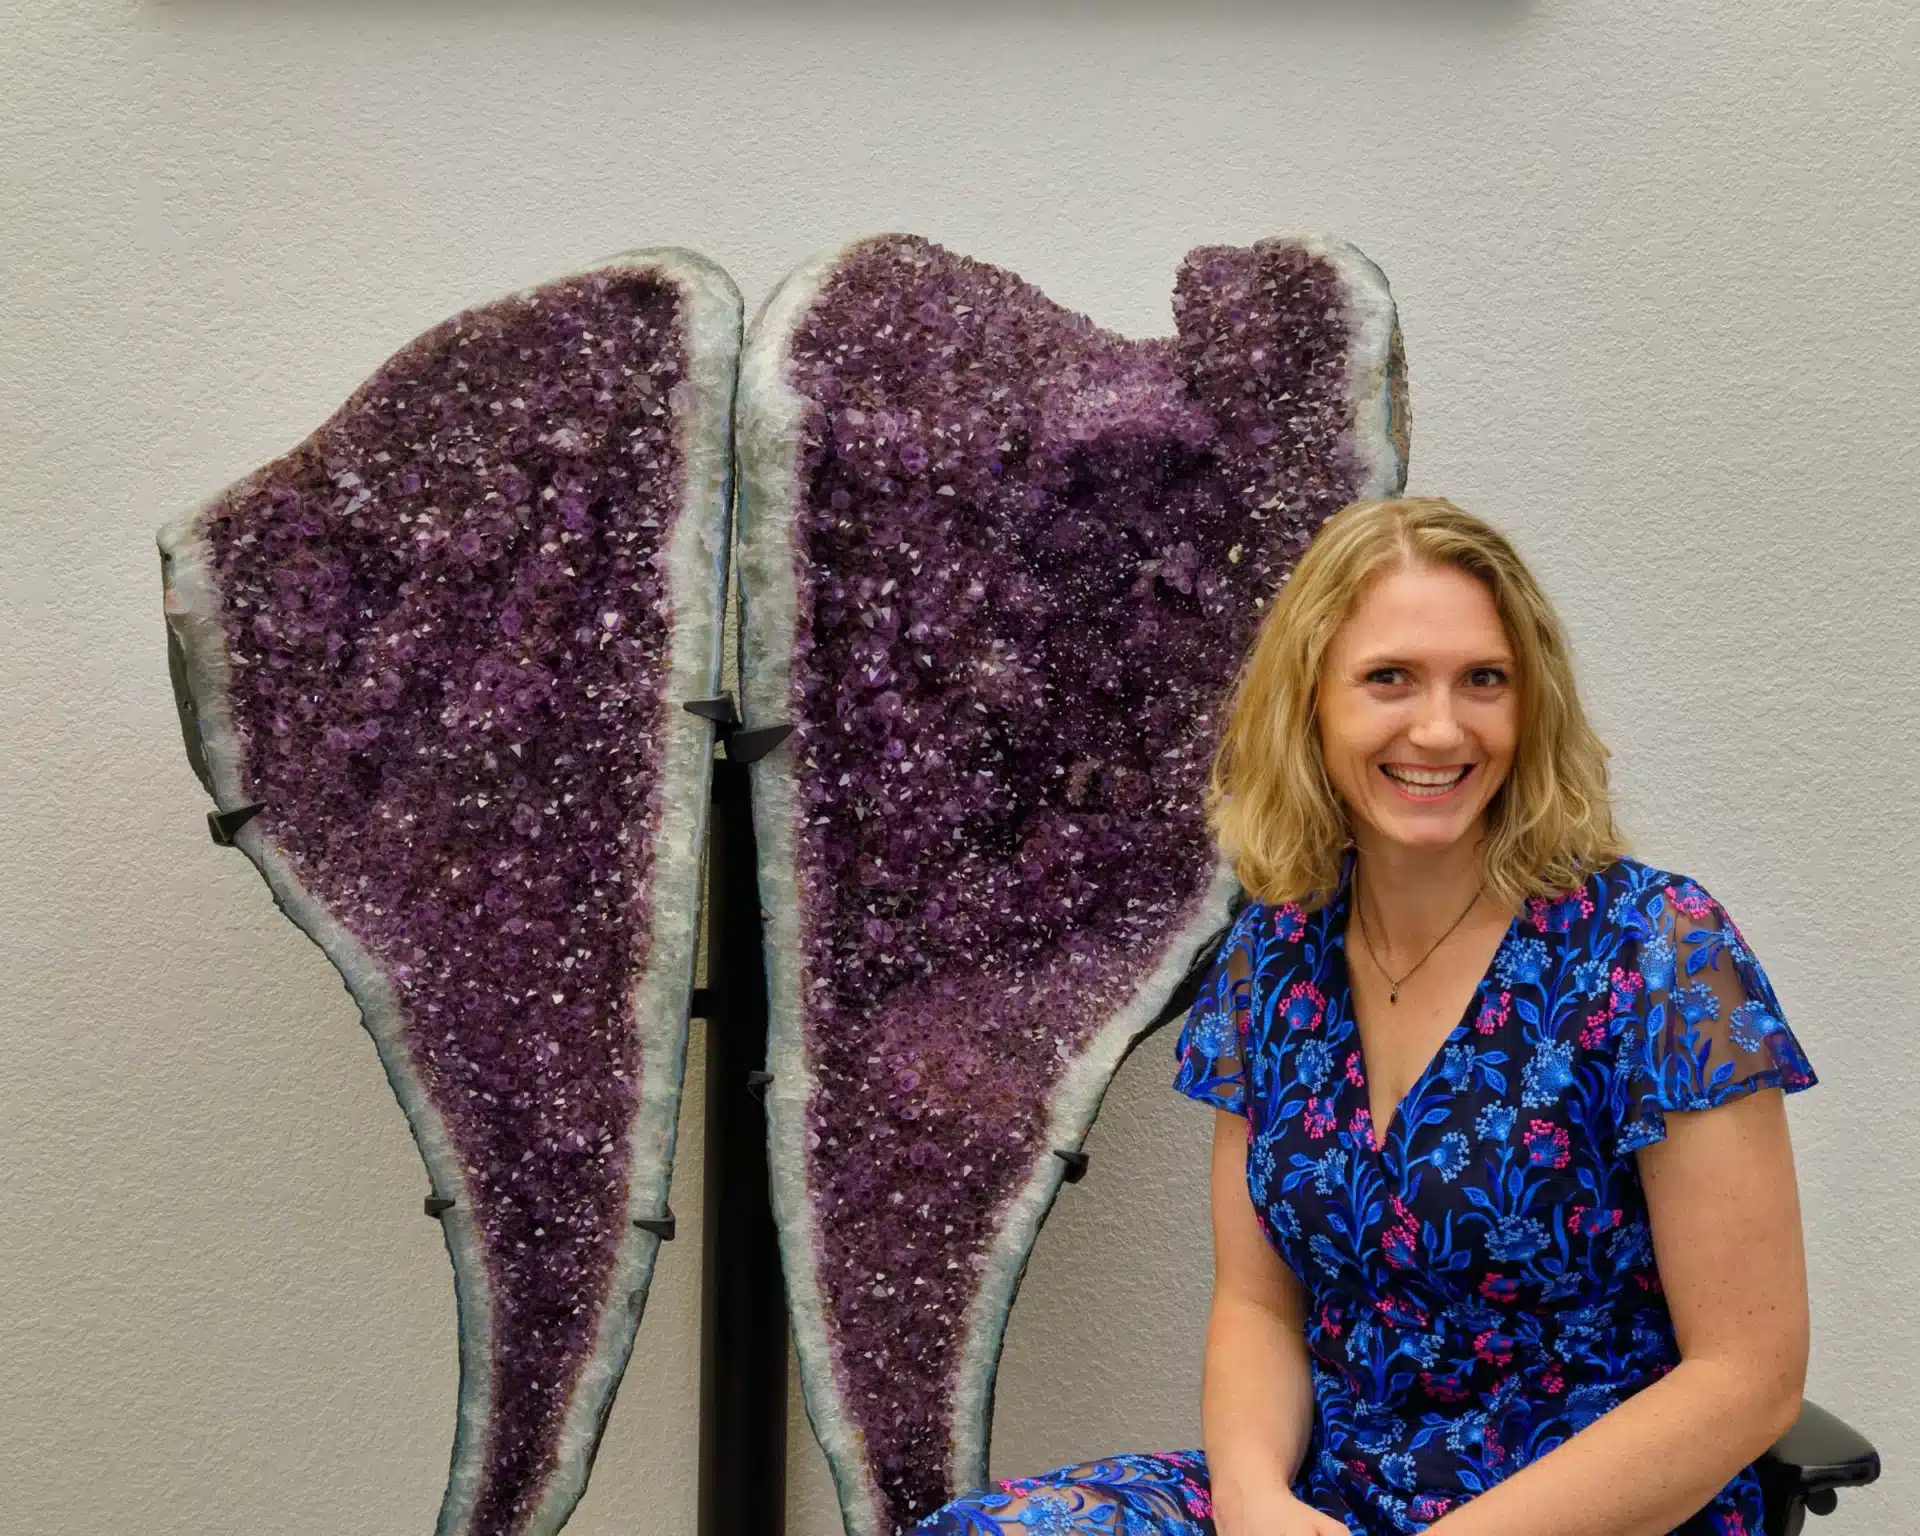 Amanda portrait in front of amethyst crystals